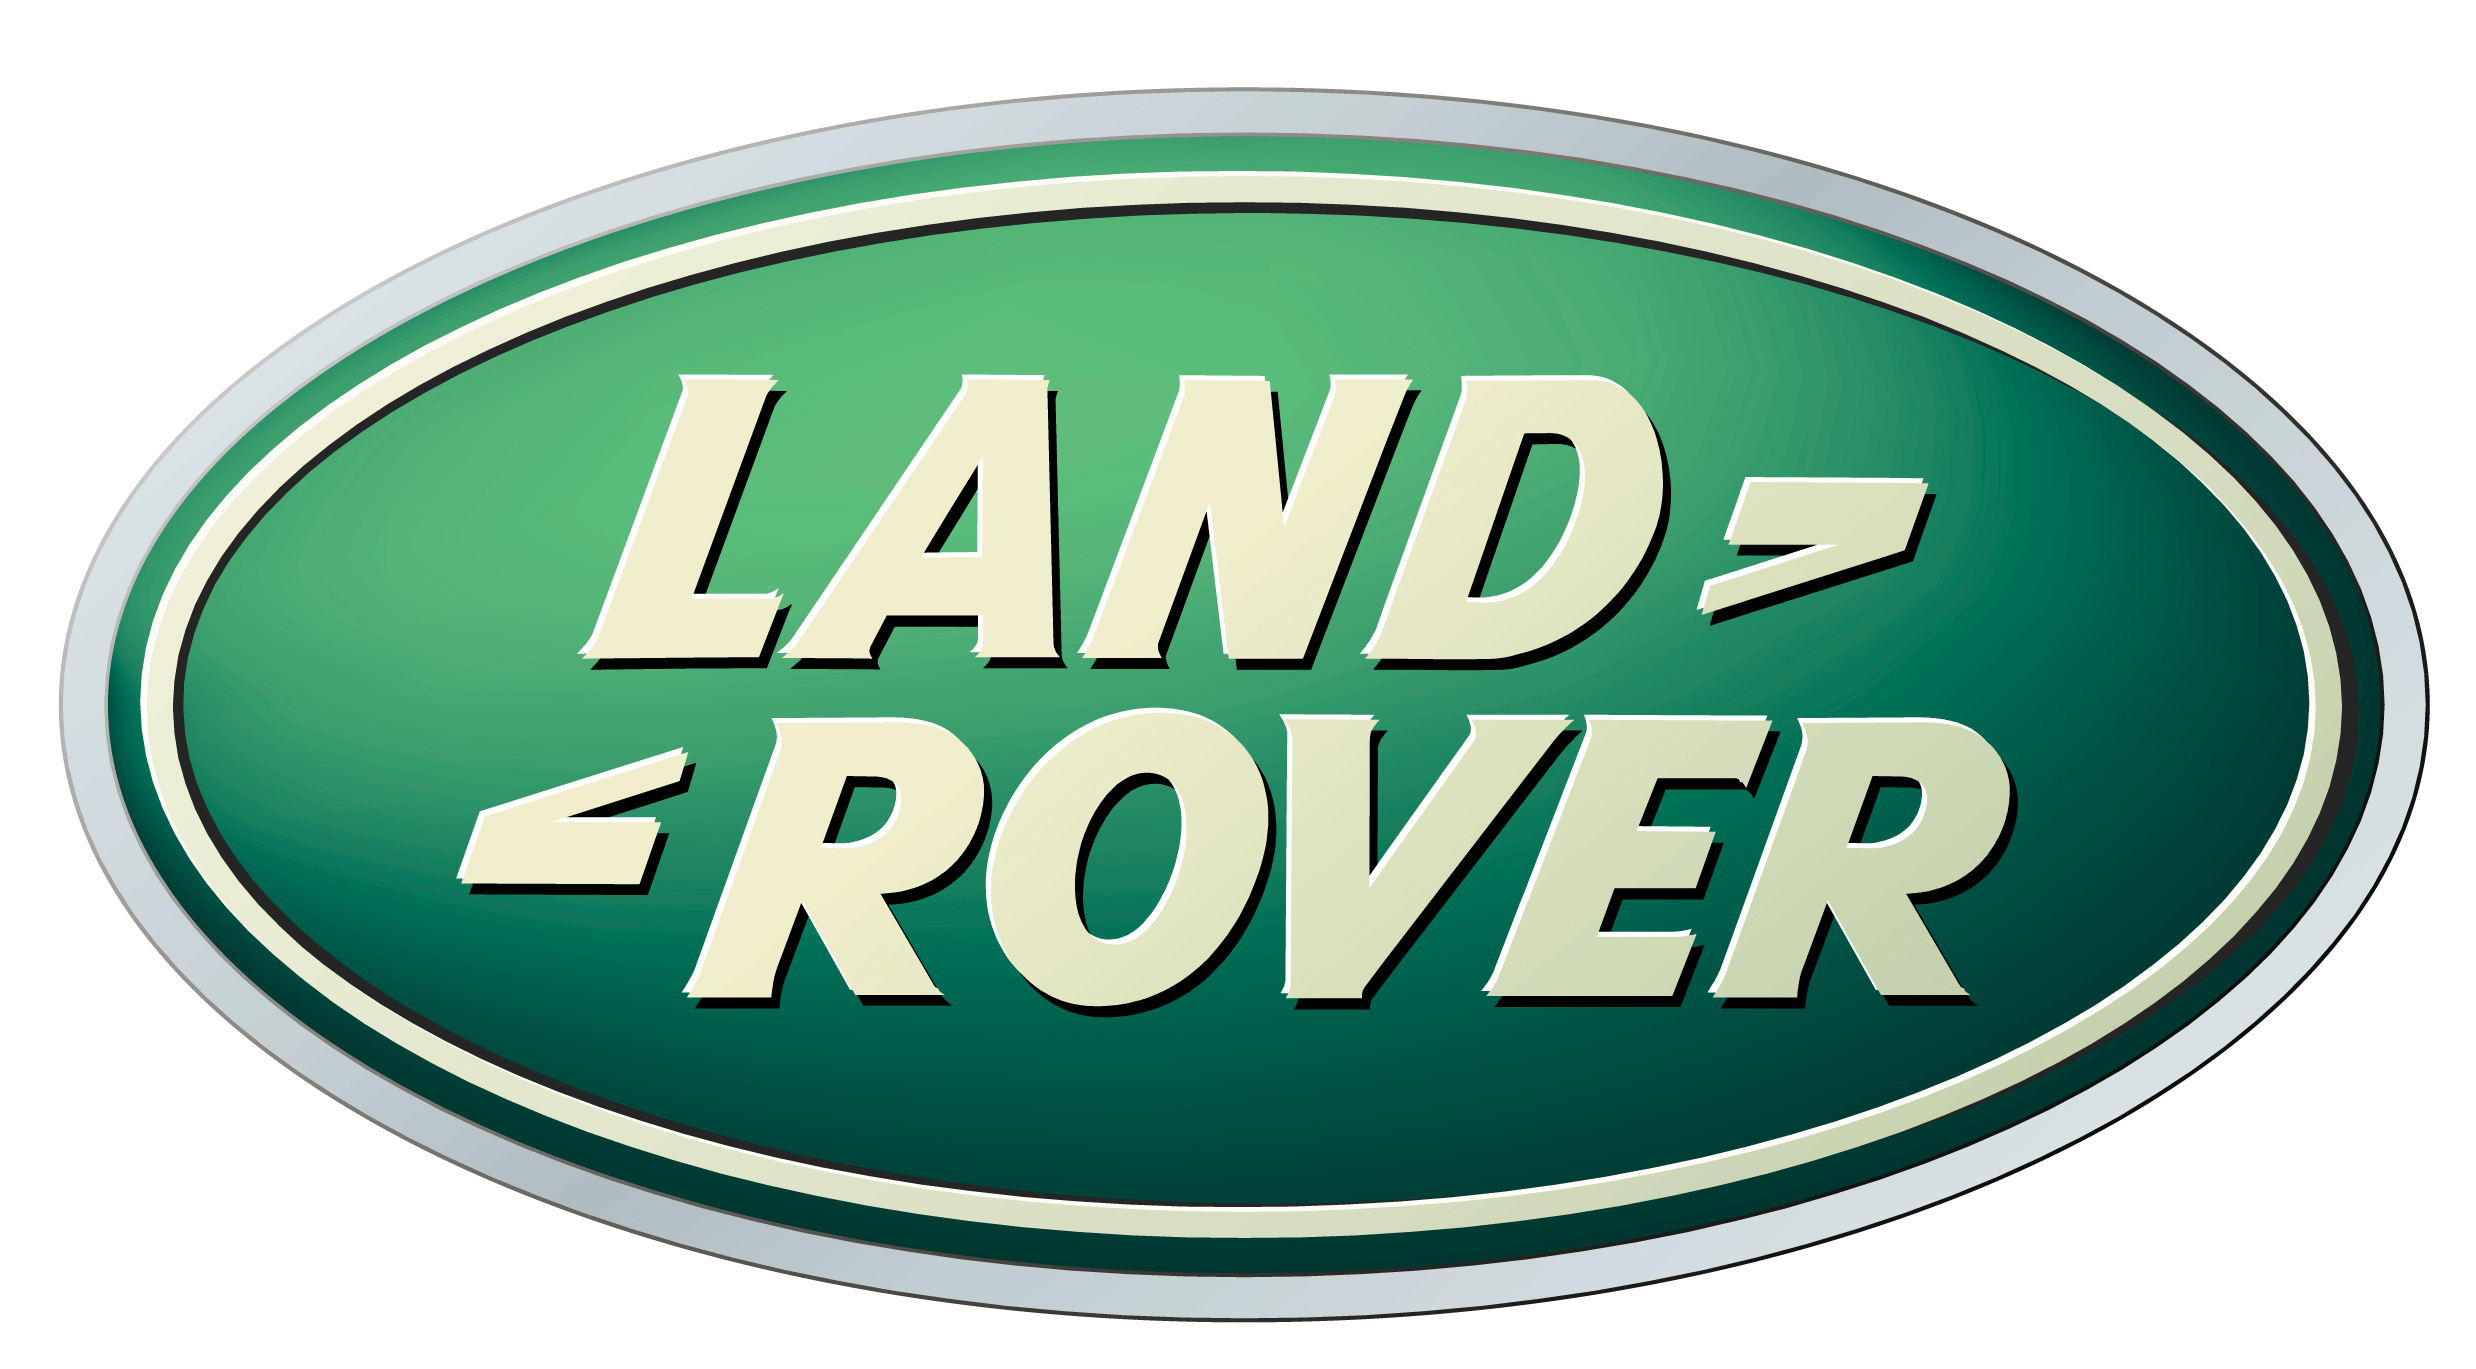 Land Rover Car Logo - Land Rover Car Logo PNG Image. Free transparent CC0 PNG